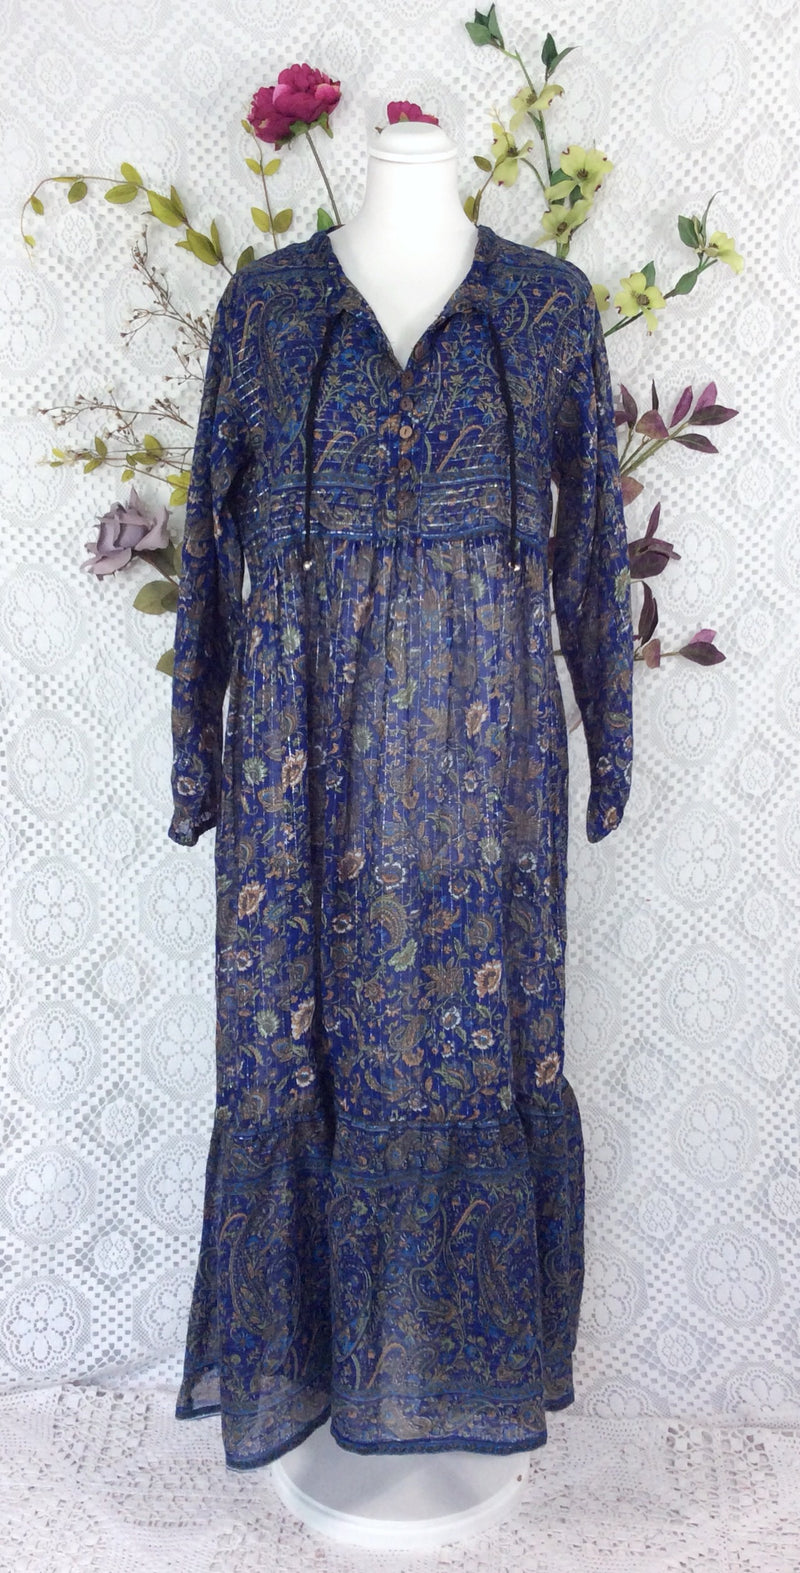 SALE Florence Dress - Sparkly Indian Cotton Smock Dress - Midnight Blue & Sage - Size S/M